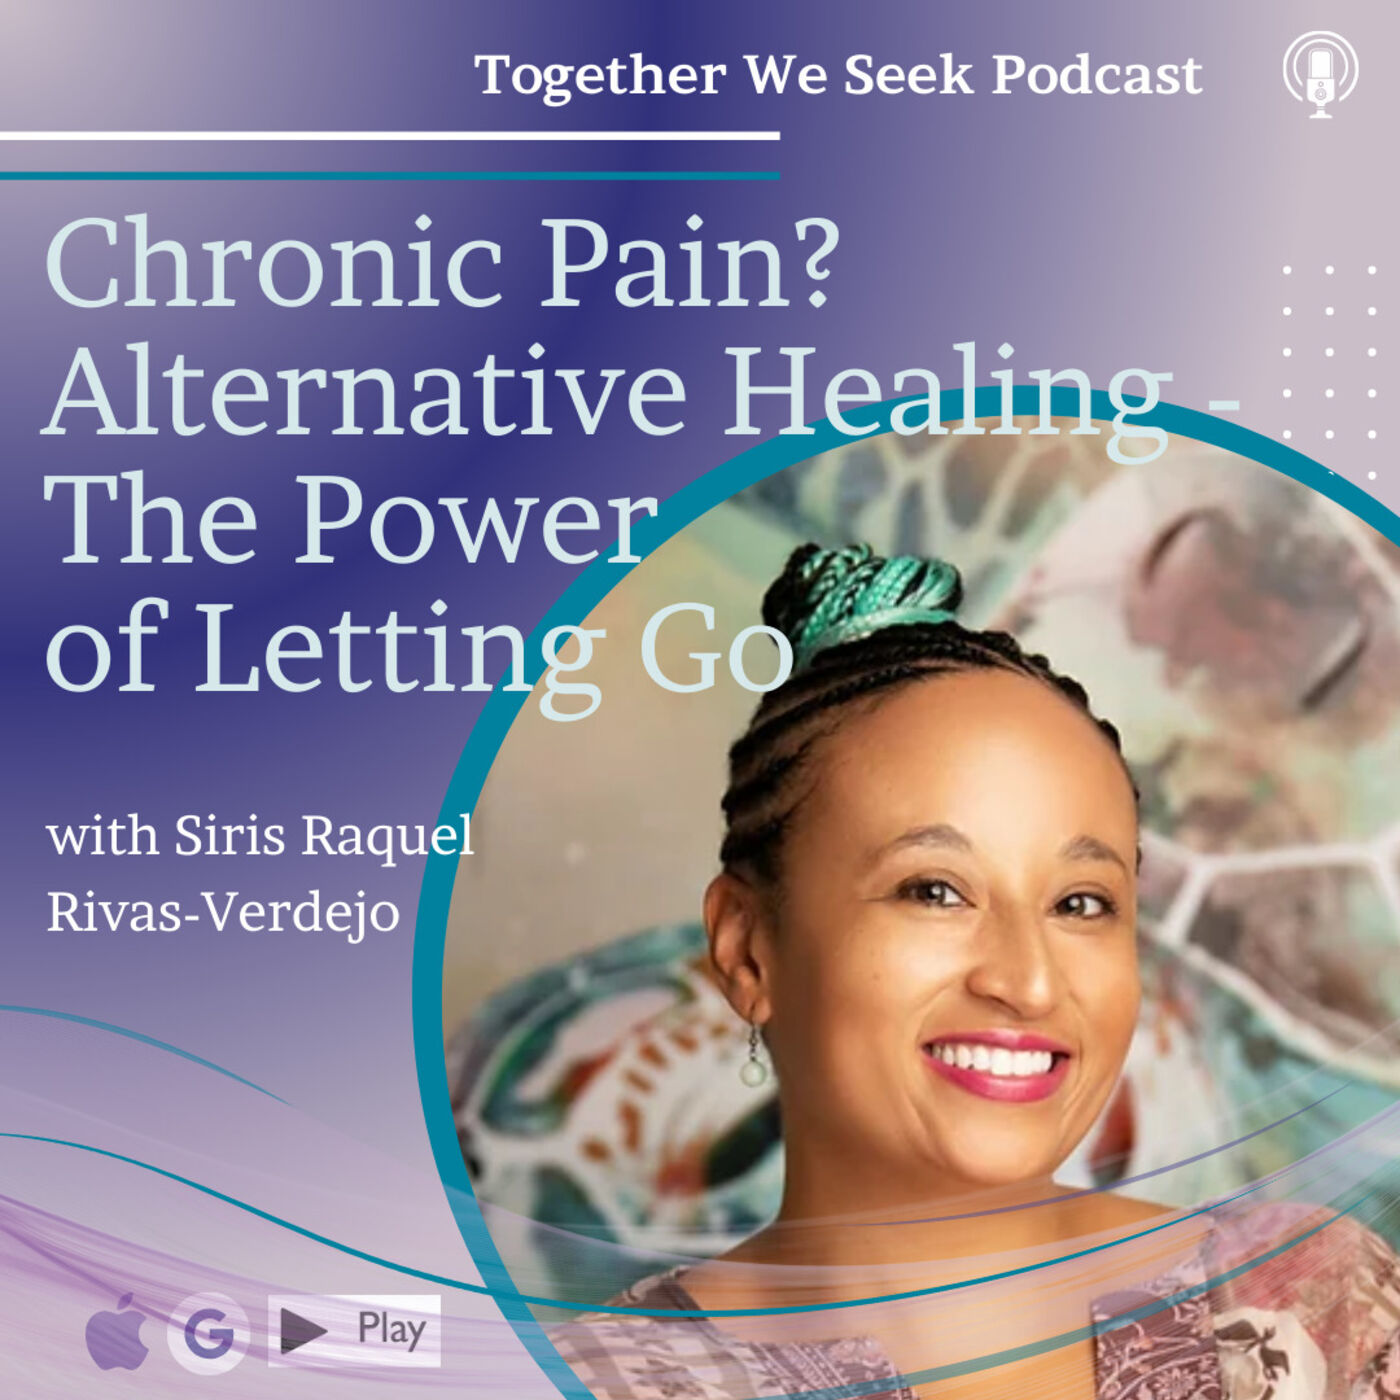 Chronic Pain? Alternative Healing – The Power of Letting Go with Siris Raquel Rivas-Verdejo